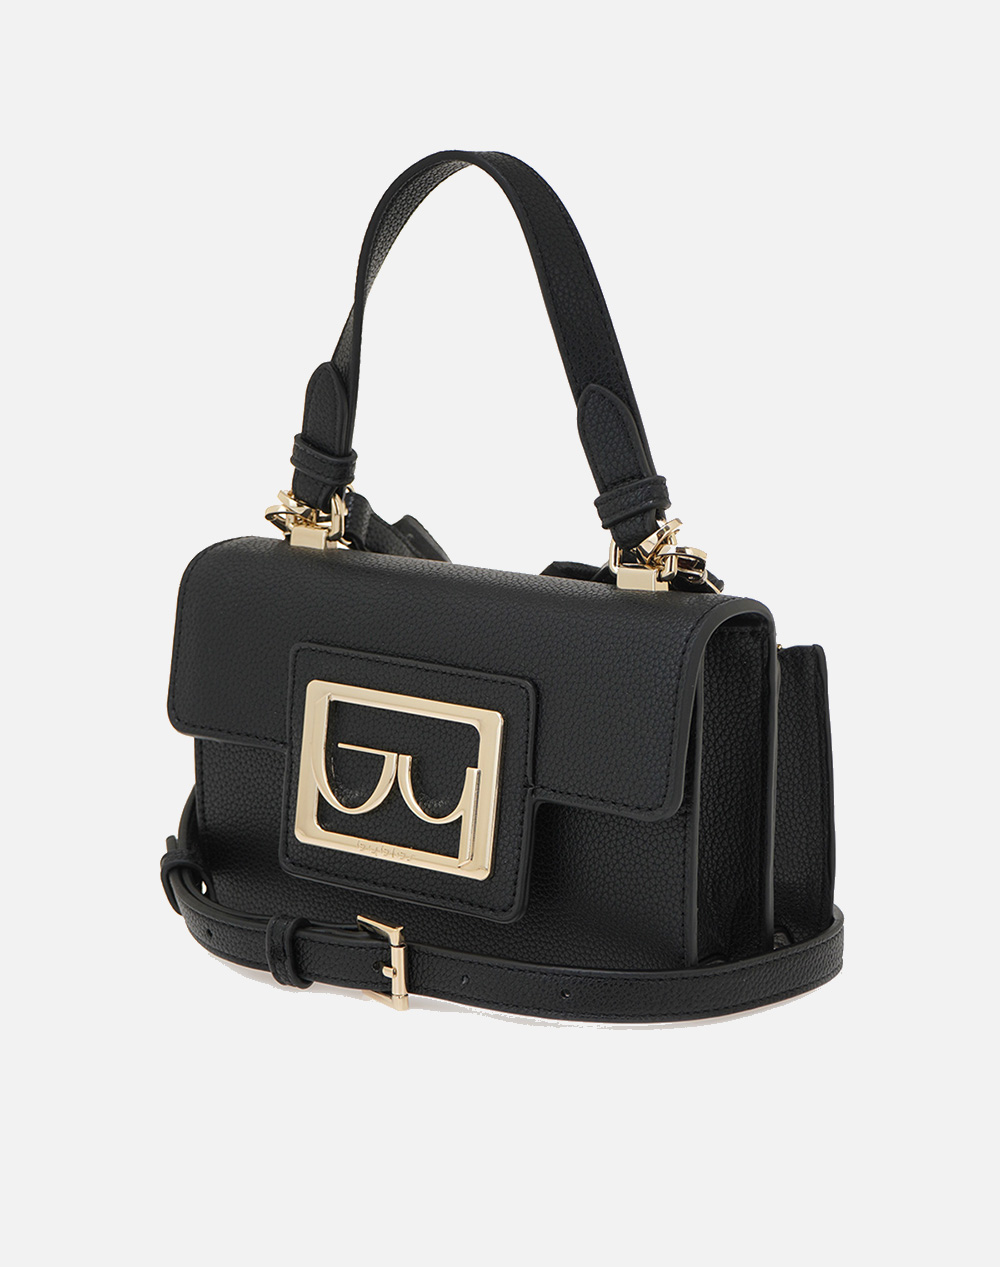 BYBLOS Handbags (Dimensions: 19 x 12 x 6.5 cm)